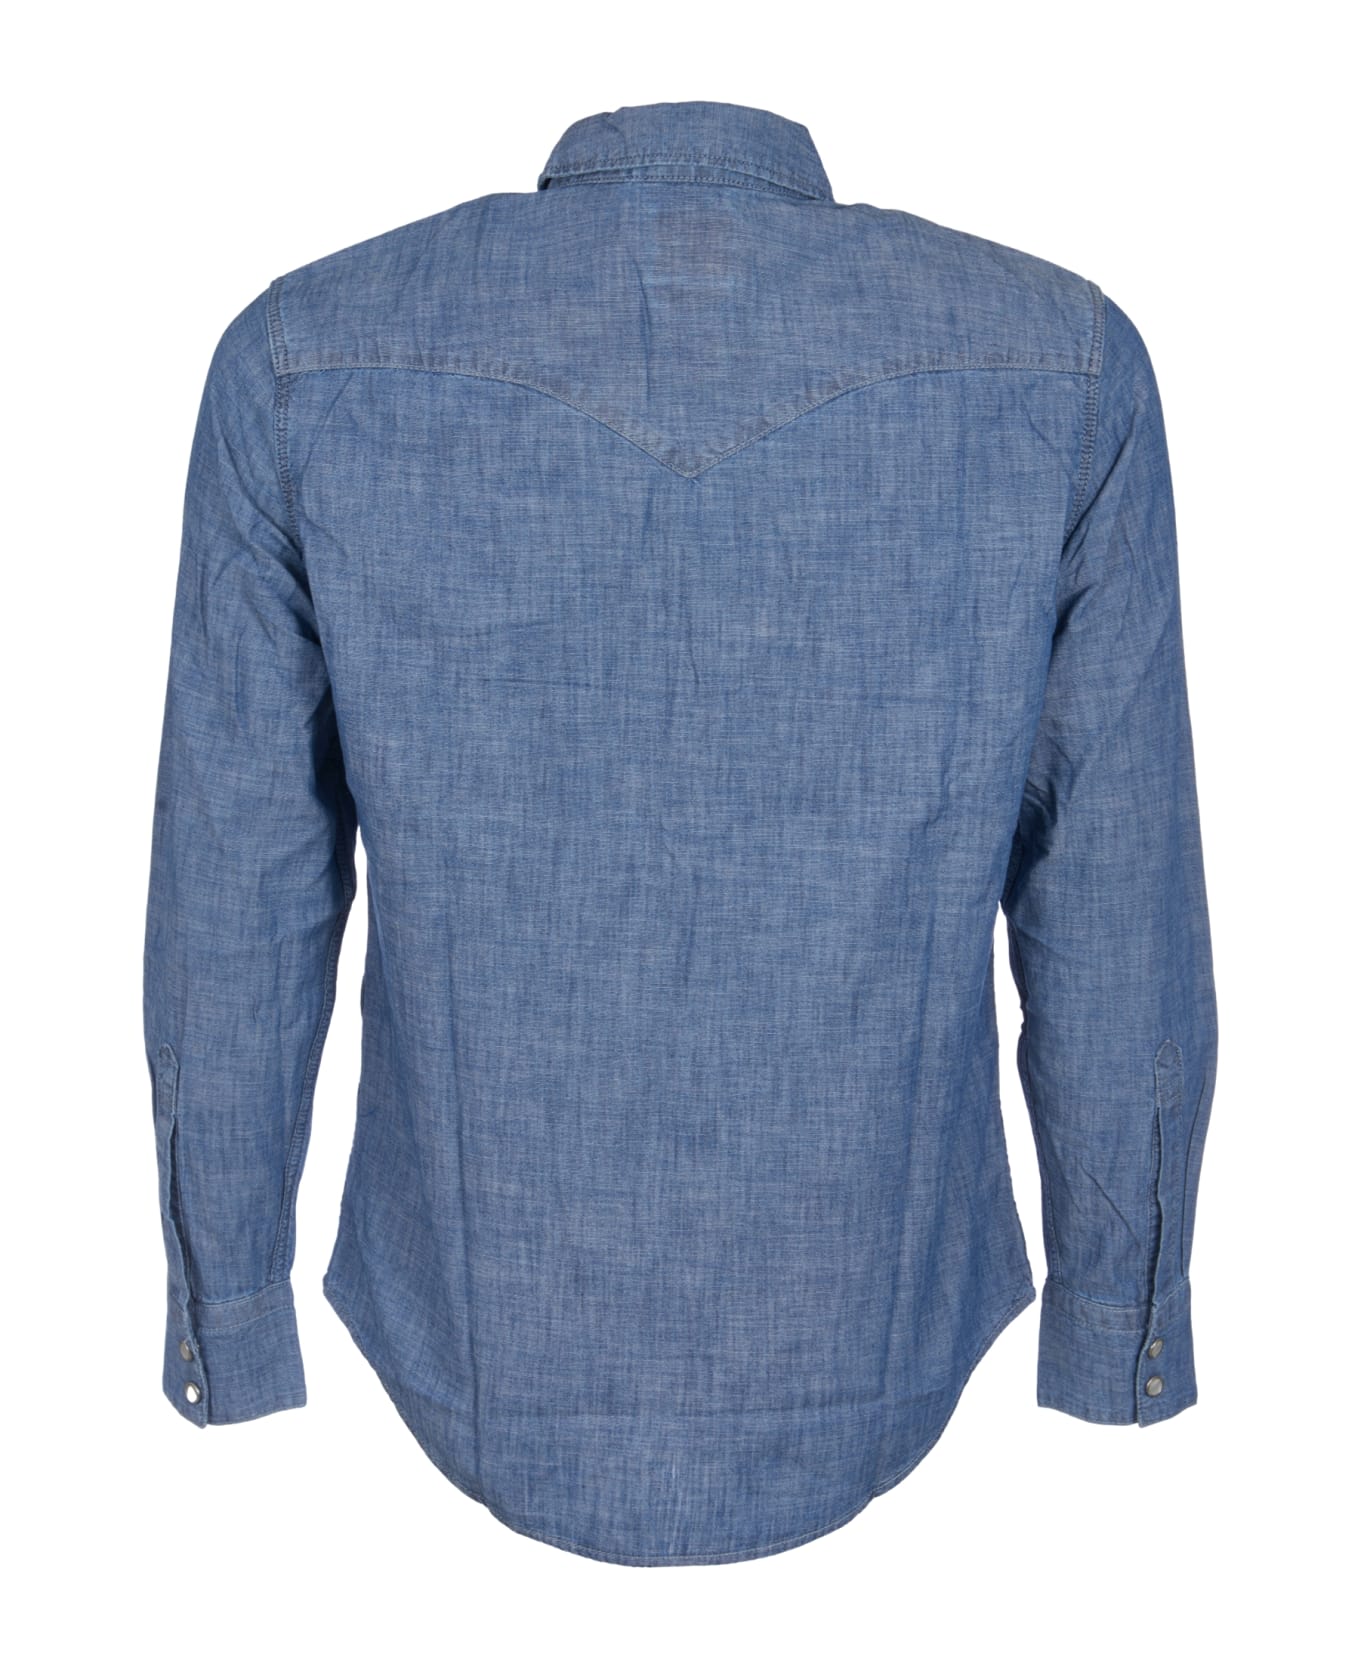 Levi's Barston Shirt - Mid Blue